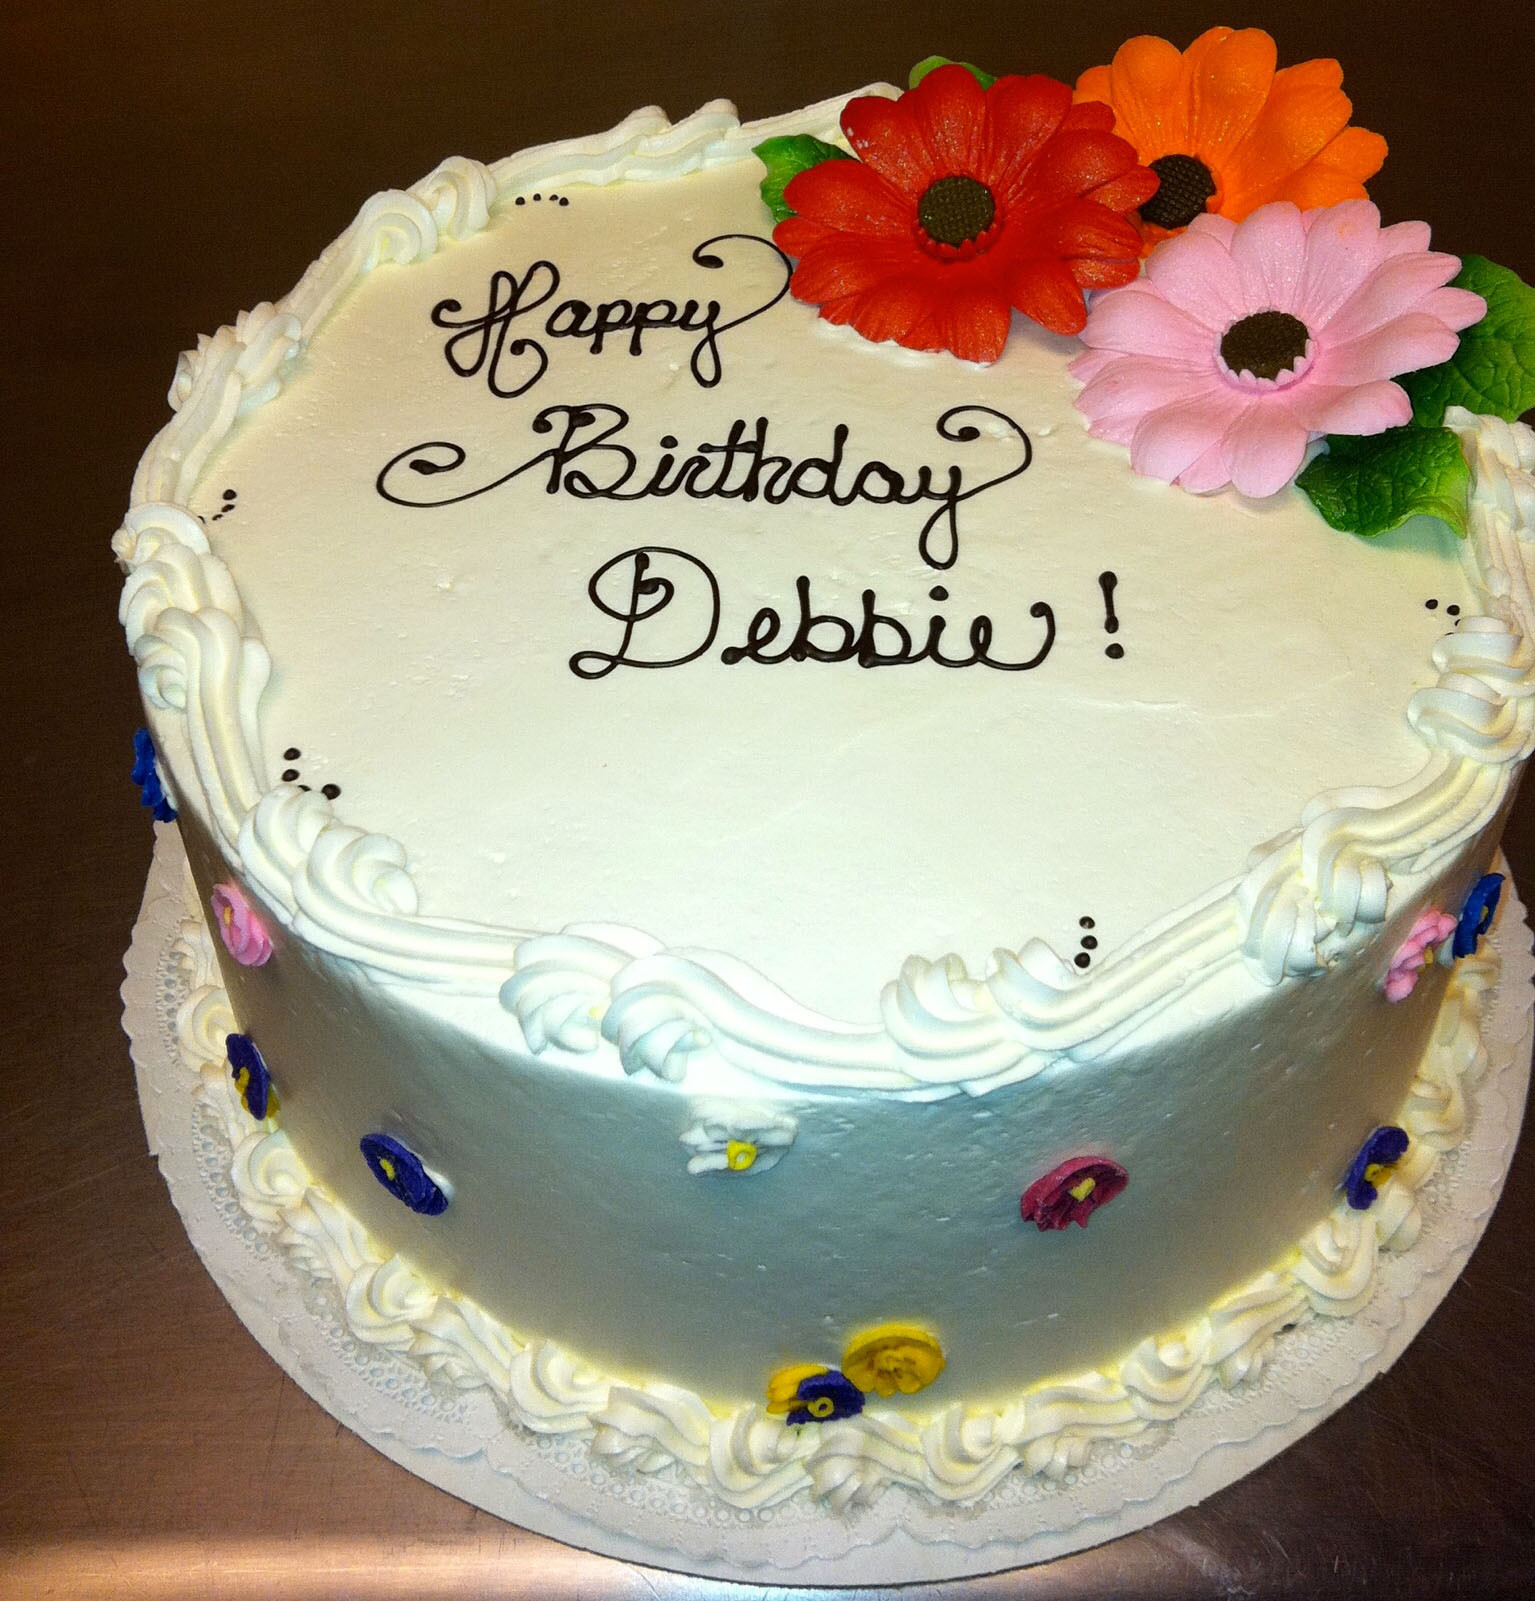 Happy Birthday Debbie Cake
 Happy Birthday Debbie